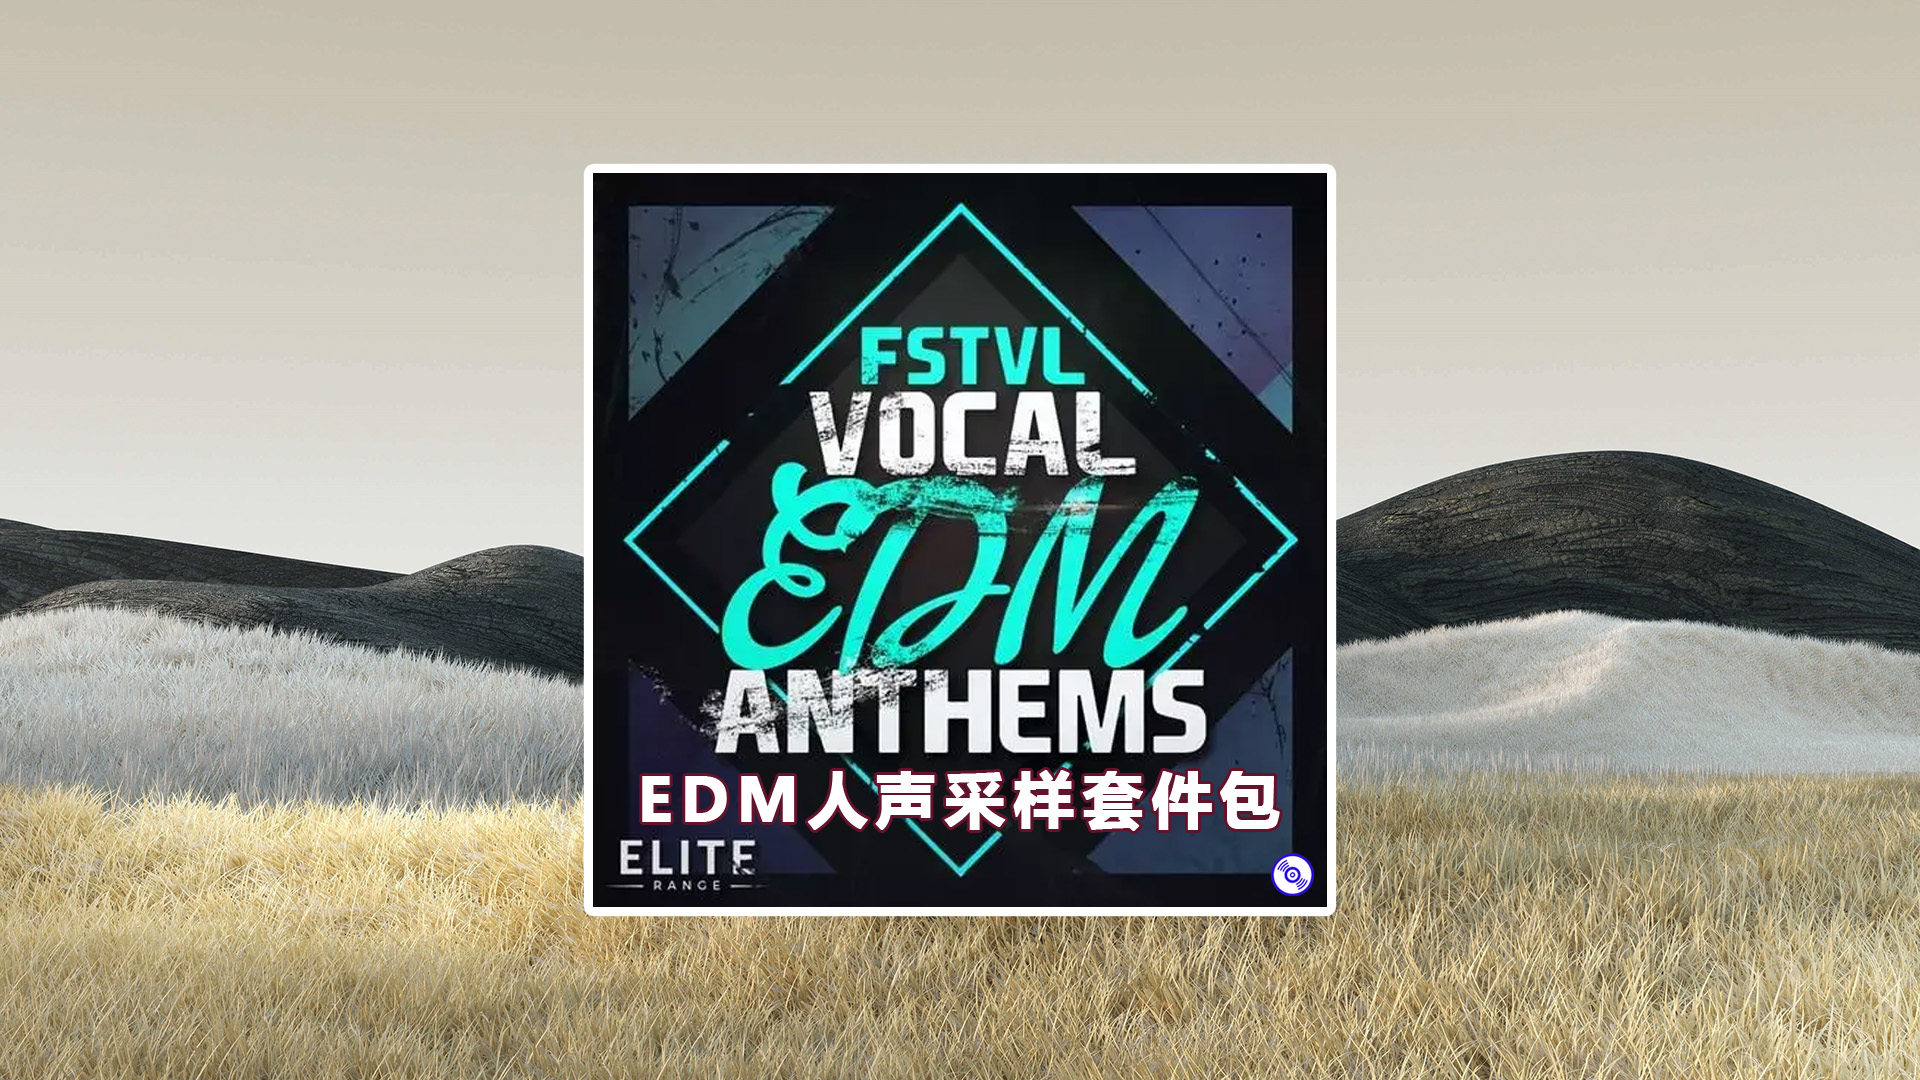 【EDM人声采样包】EDM人声采样套件包 Vocal EDM Anthems Samples